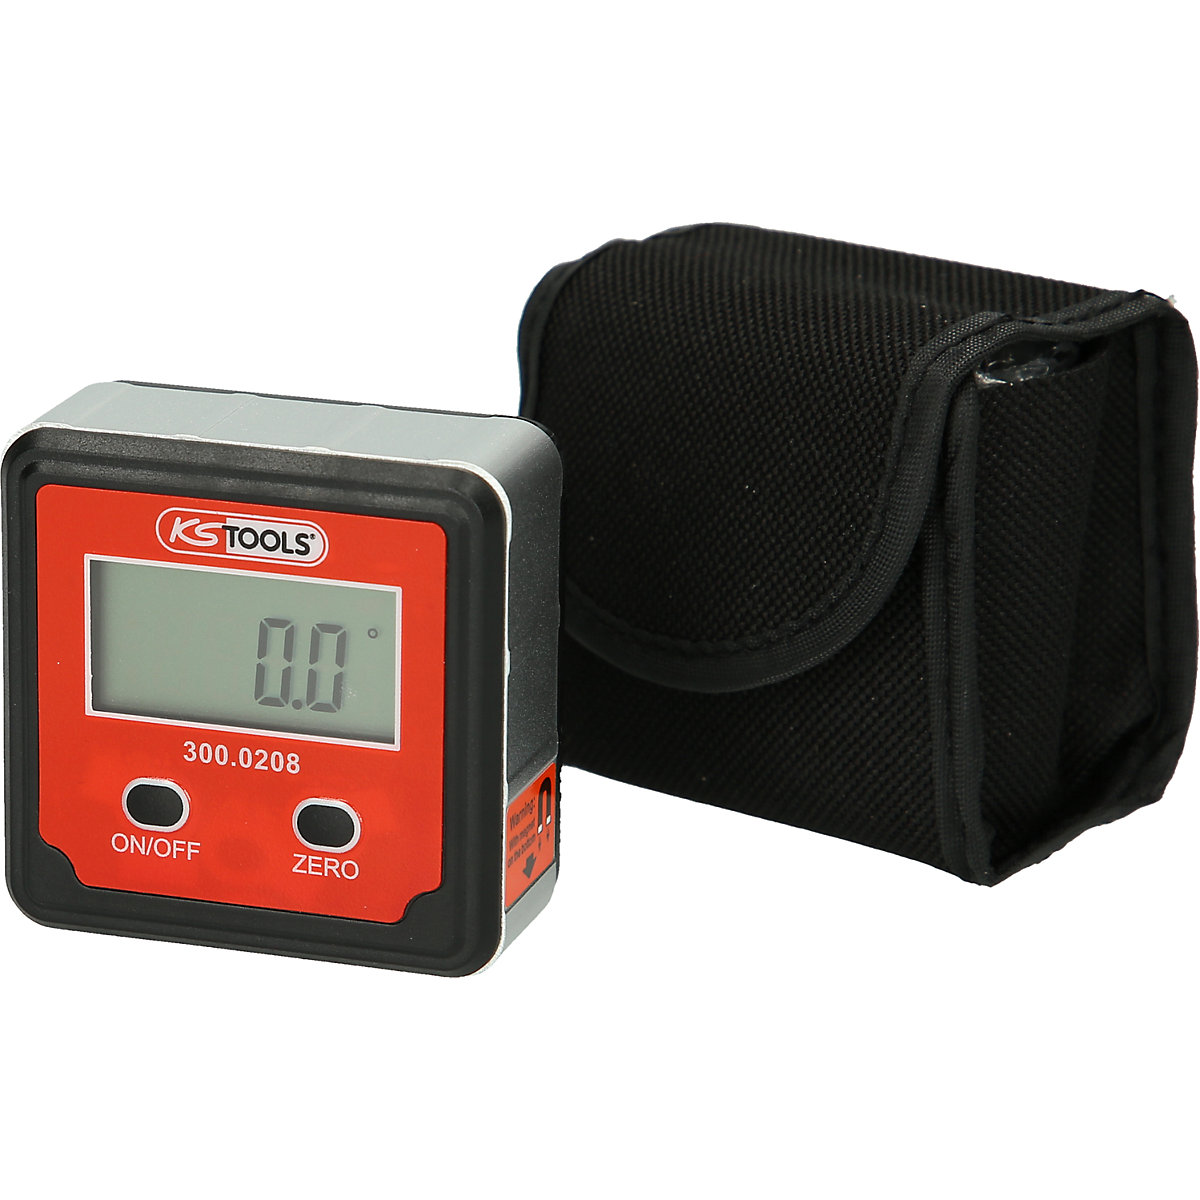 Digitalni naklonometer – KS Tools